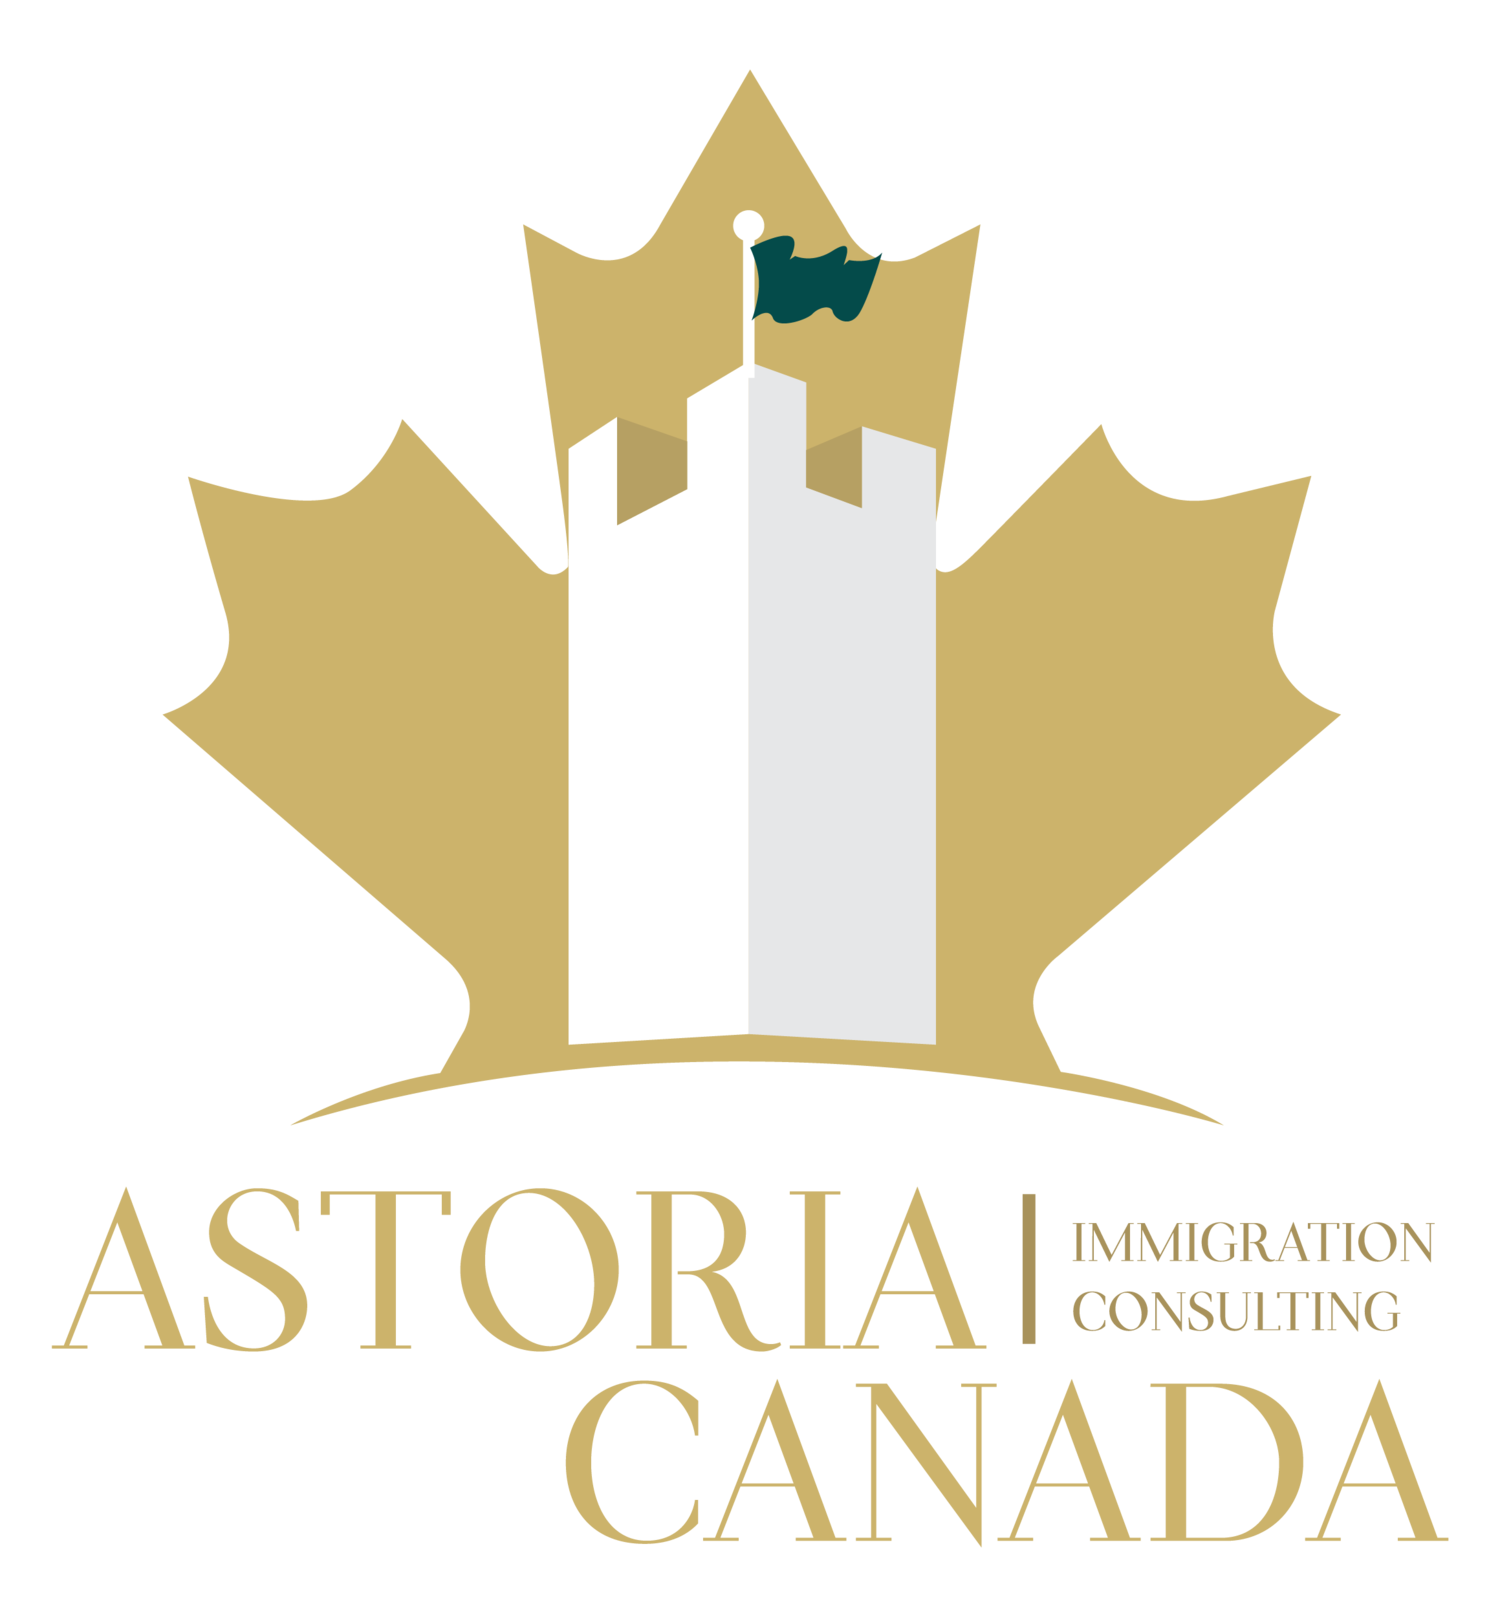 ASTORIA CANADA IMMIGRATION